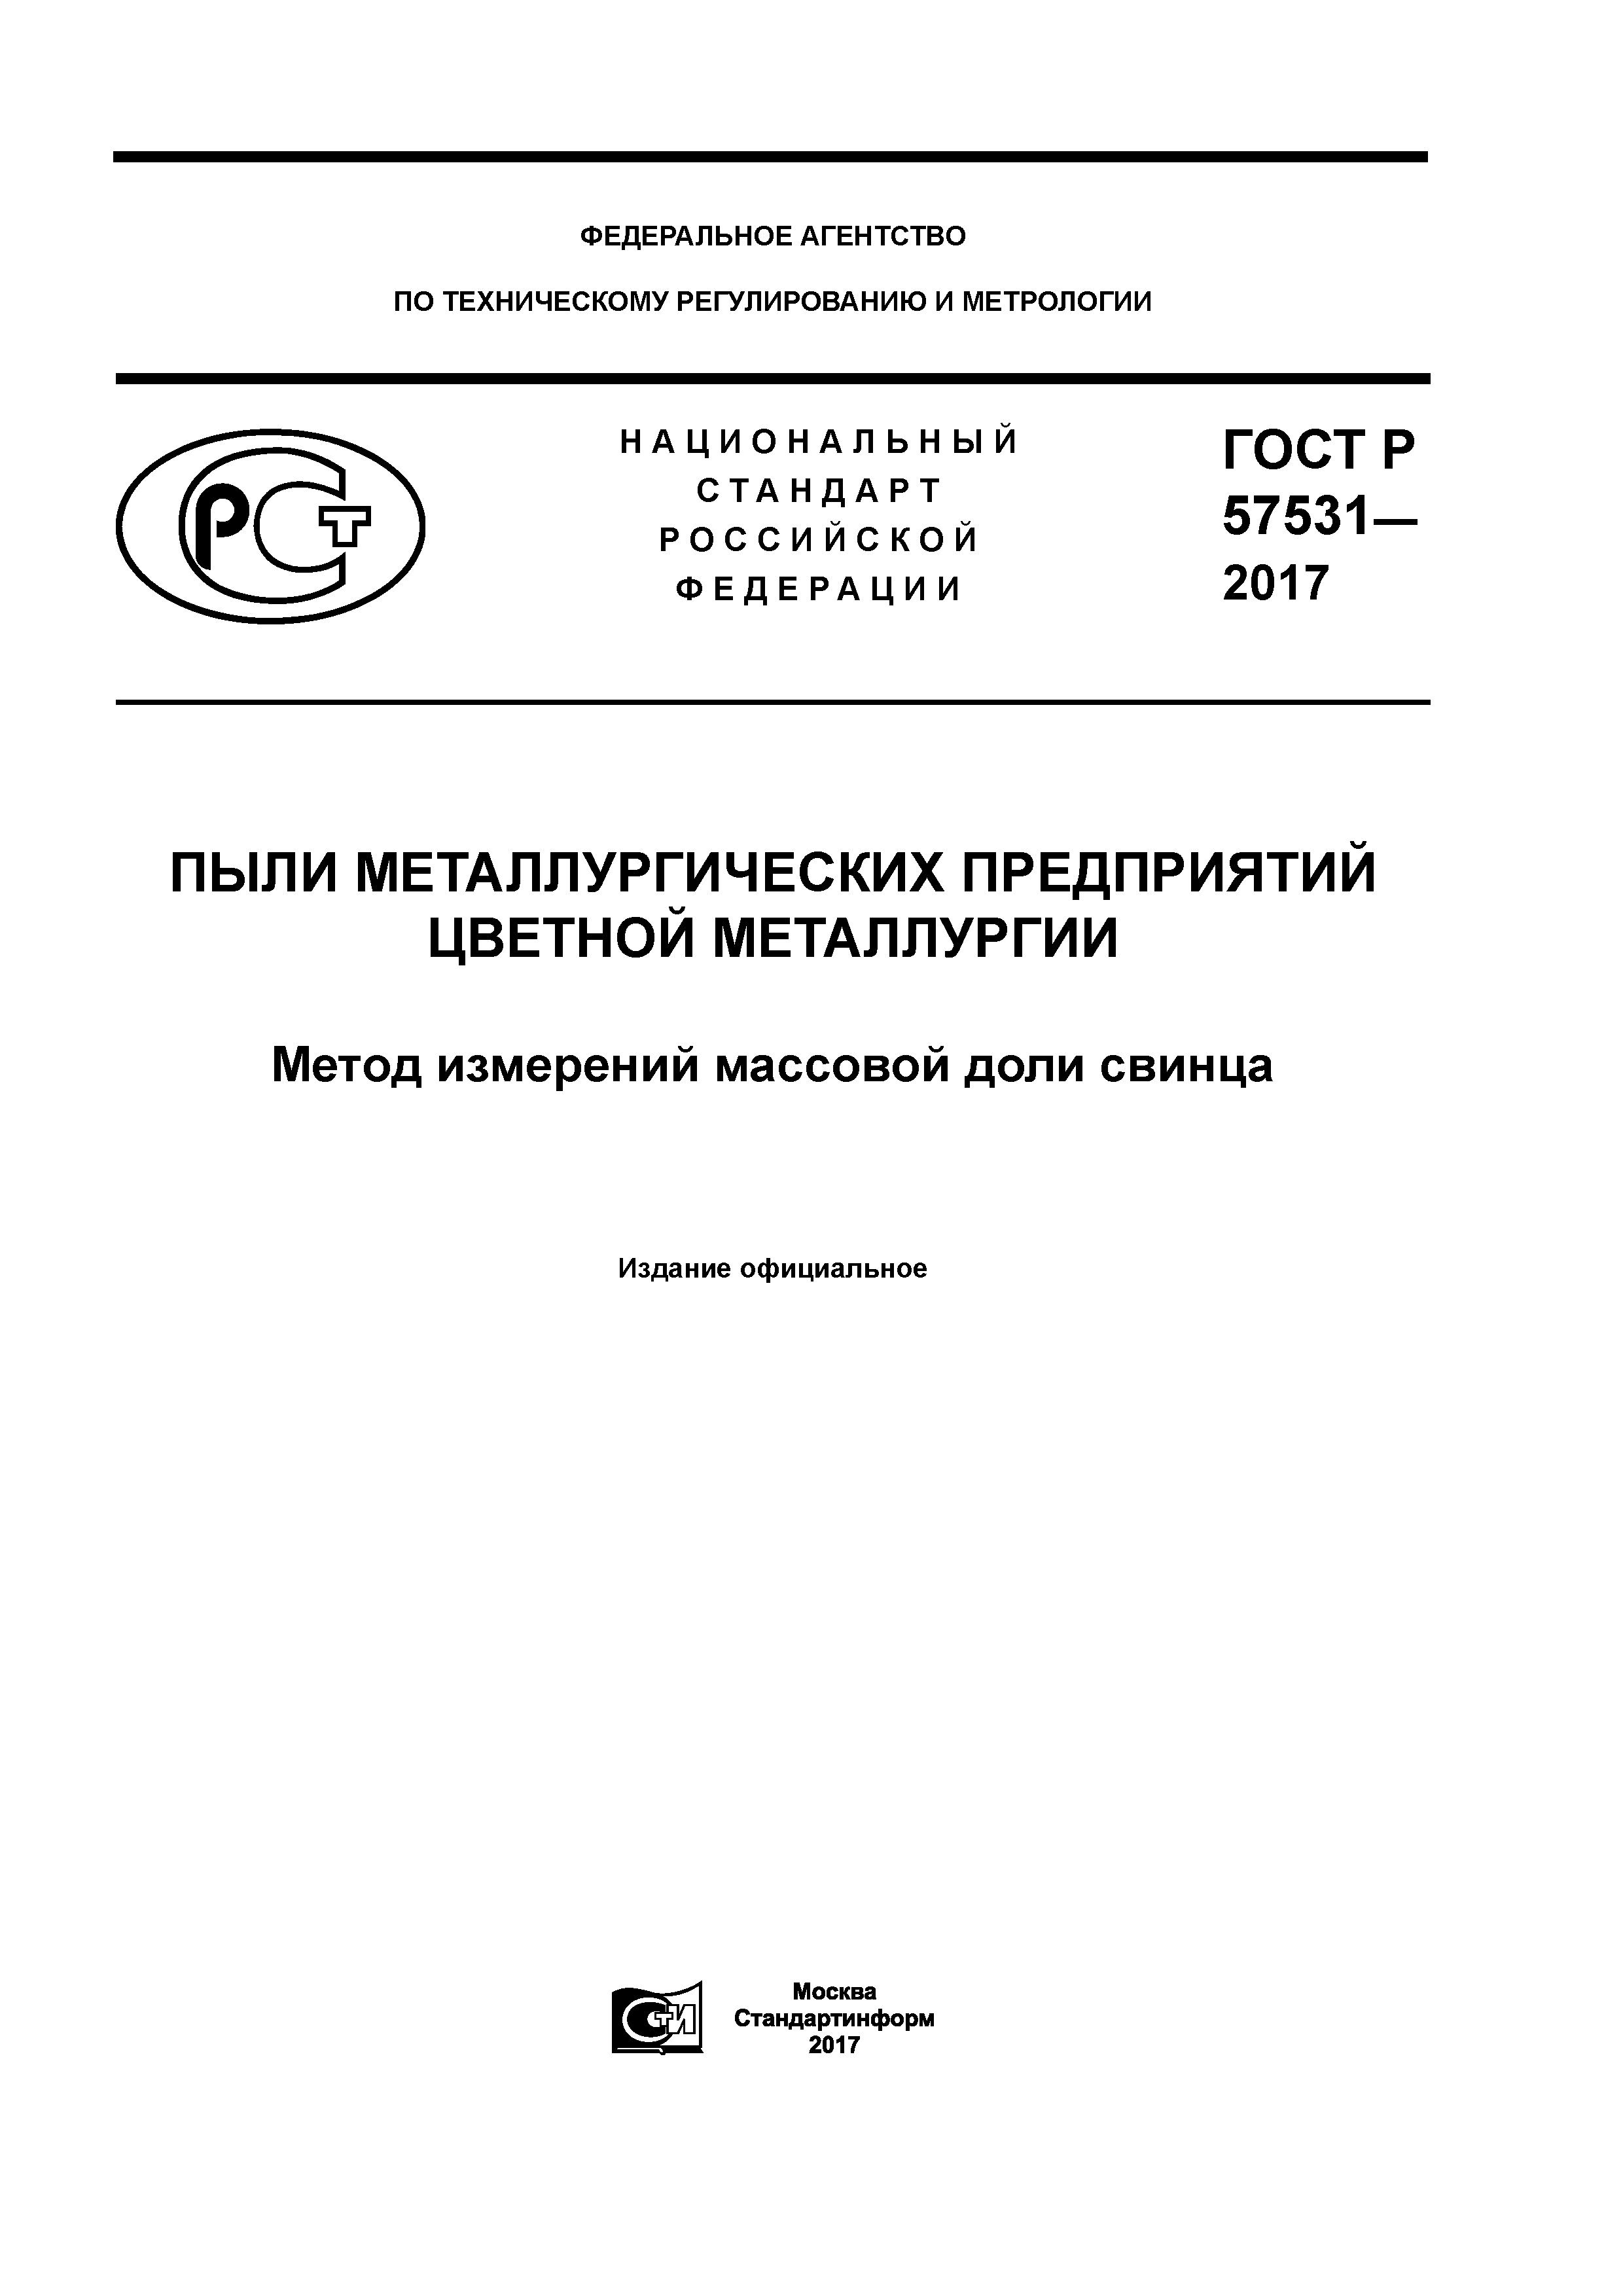 ГОСТ Р 57531-2017